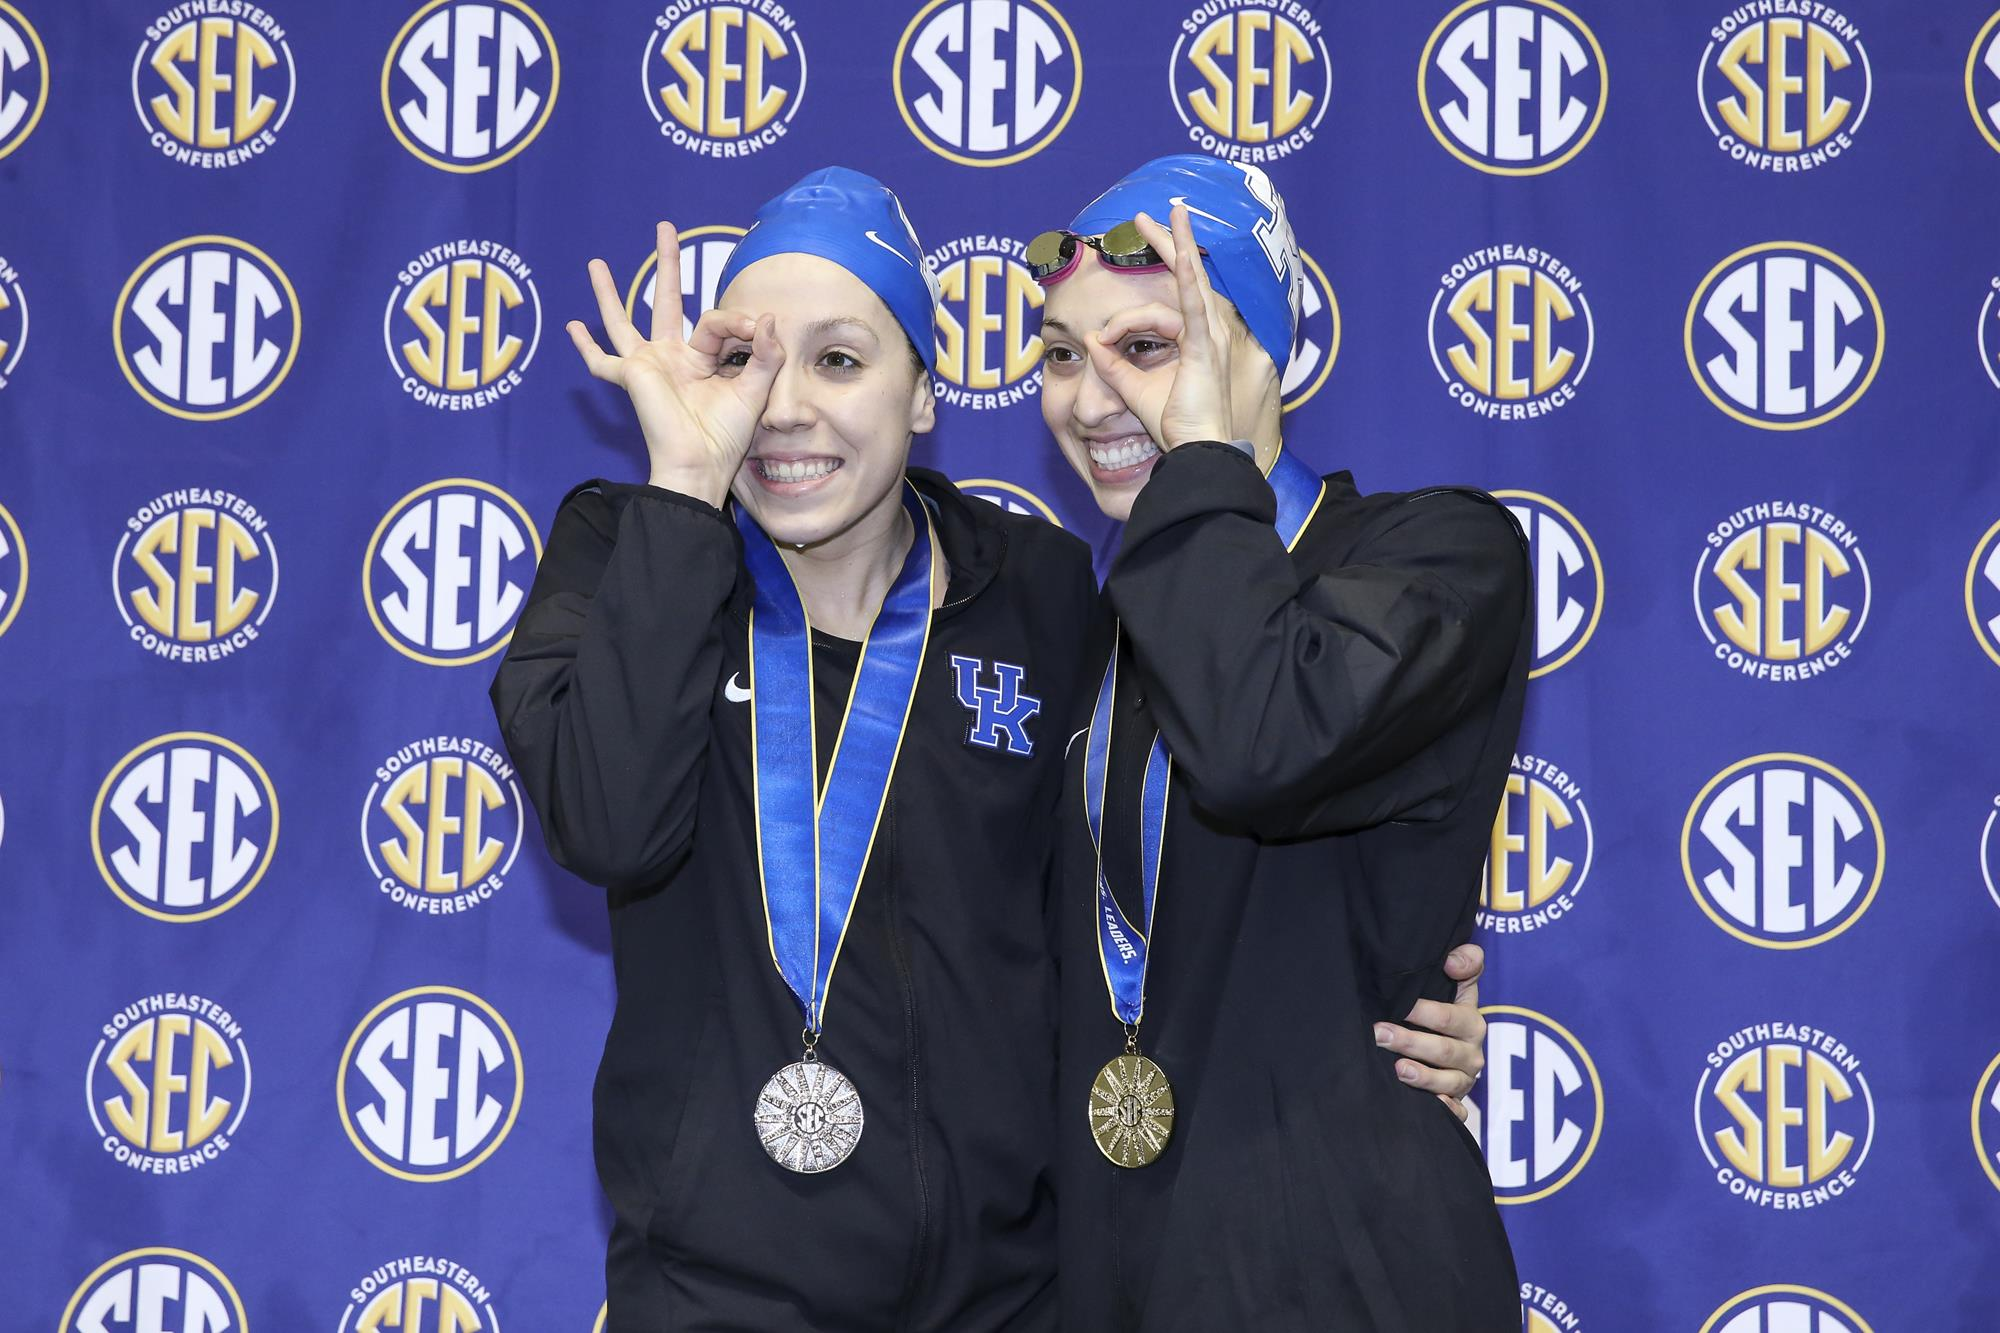 Kentucky Women Finish Third, Match Highest Finish in Program History at SEC Championships